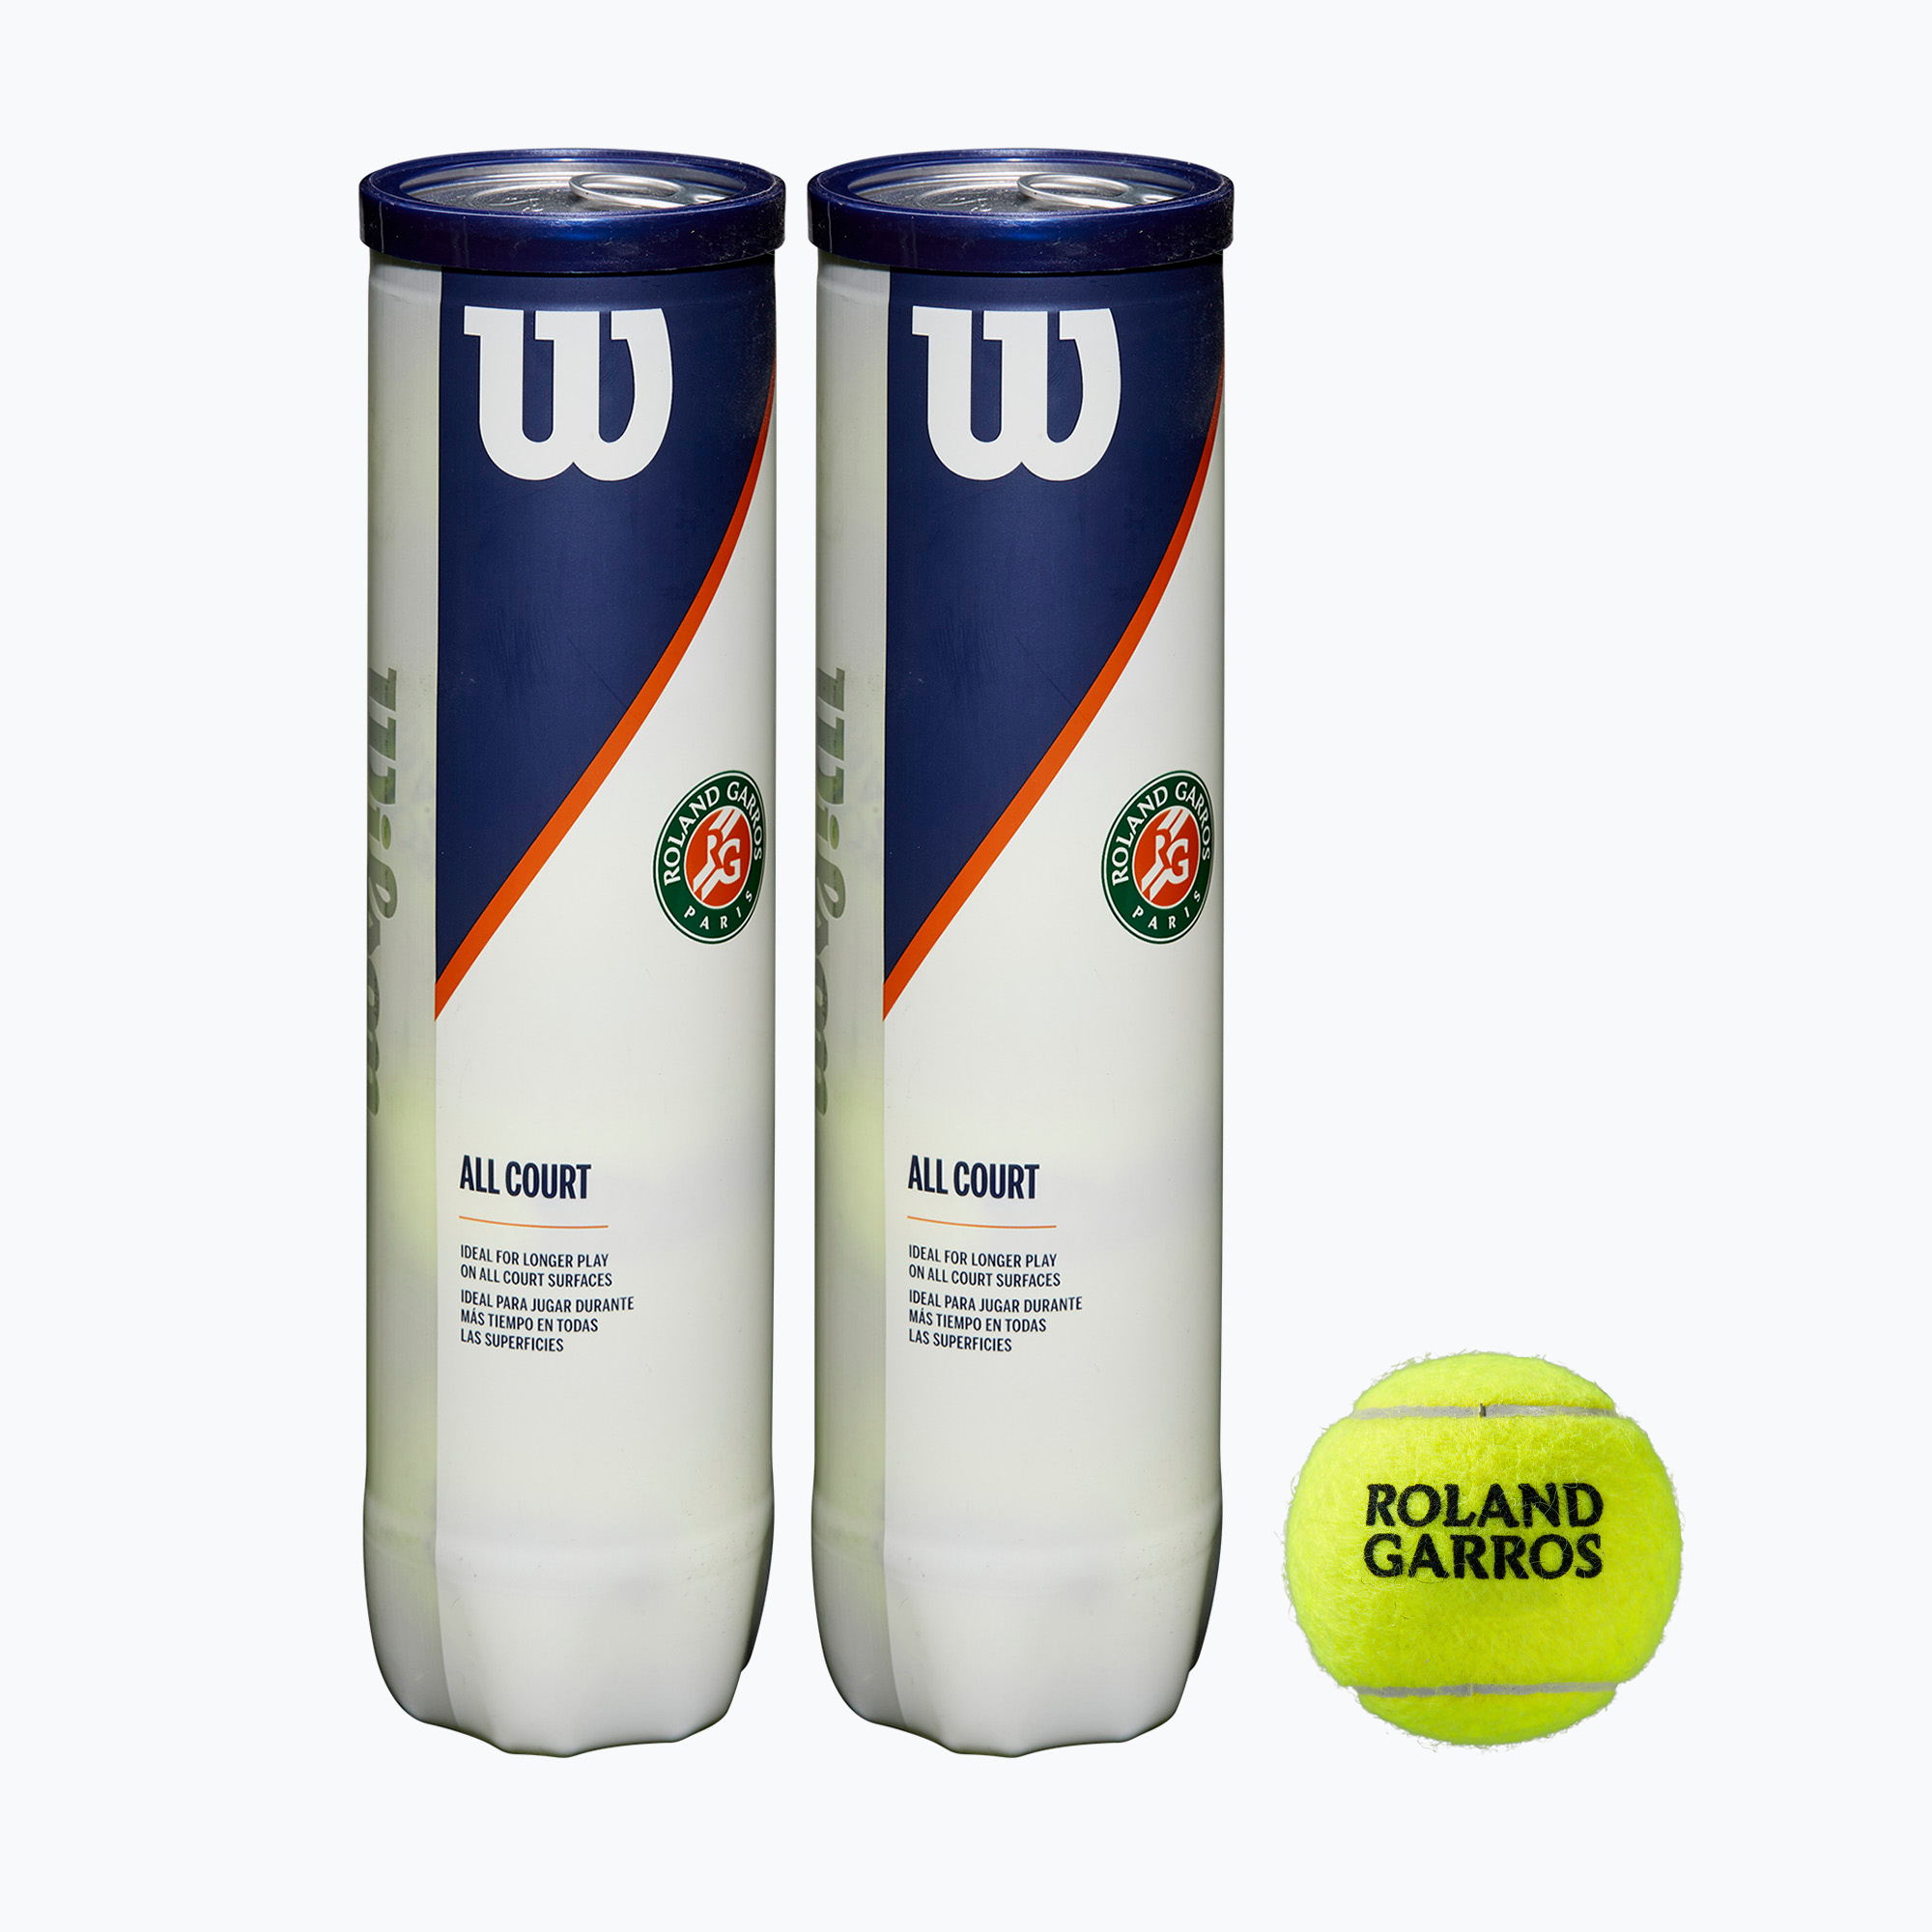 Wilson Roland Garros All Ct 4 Ball tenisové loptičky 2Pk 8 ks žlté WRT116402